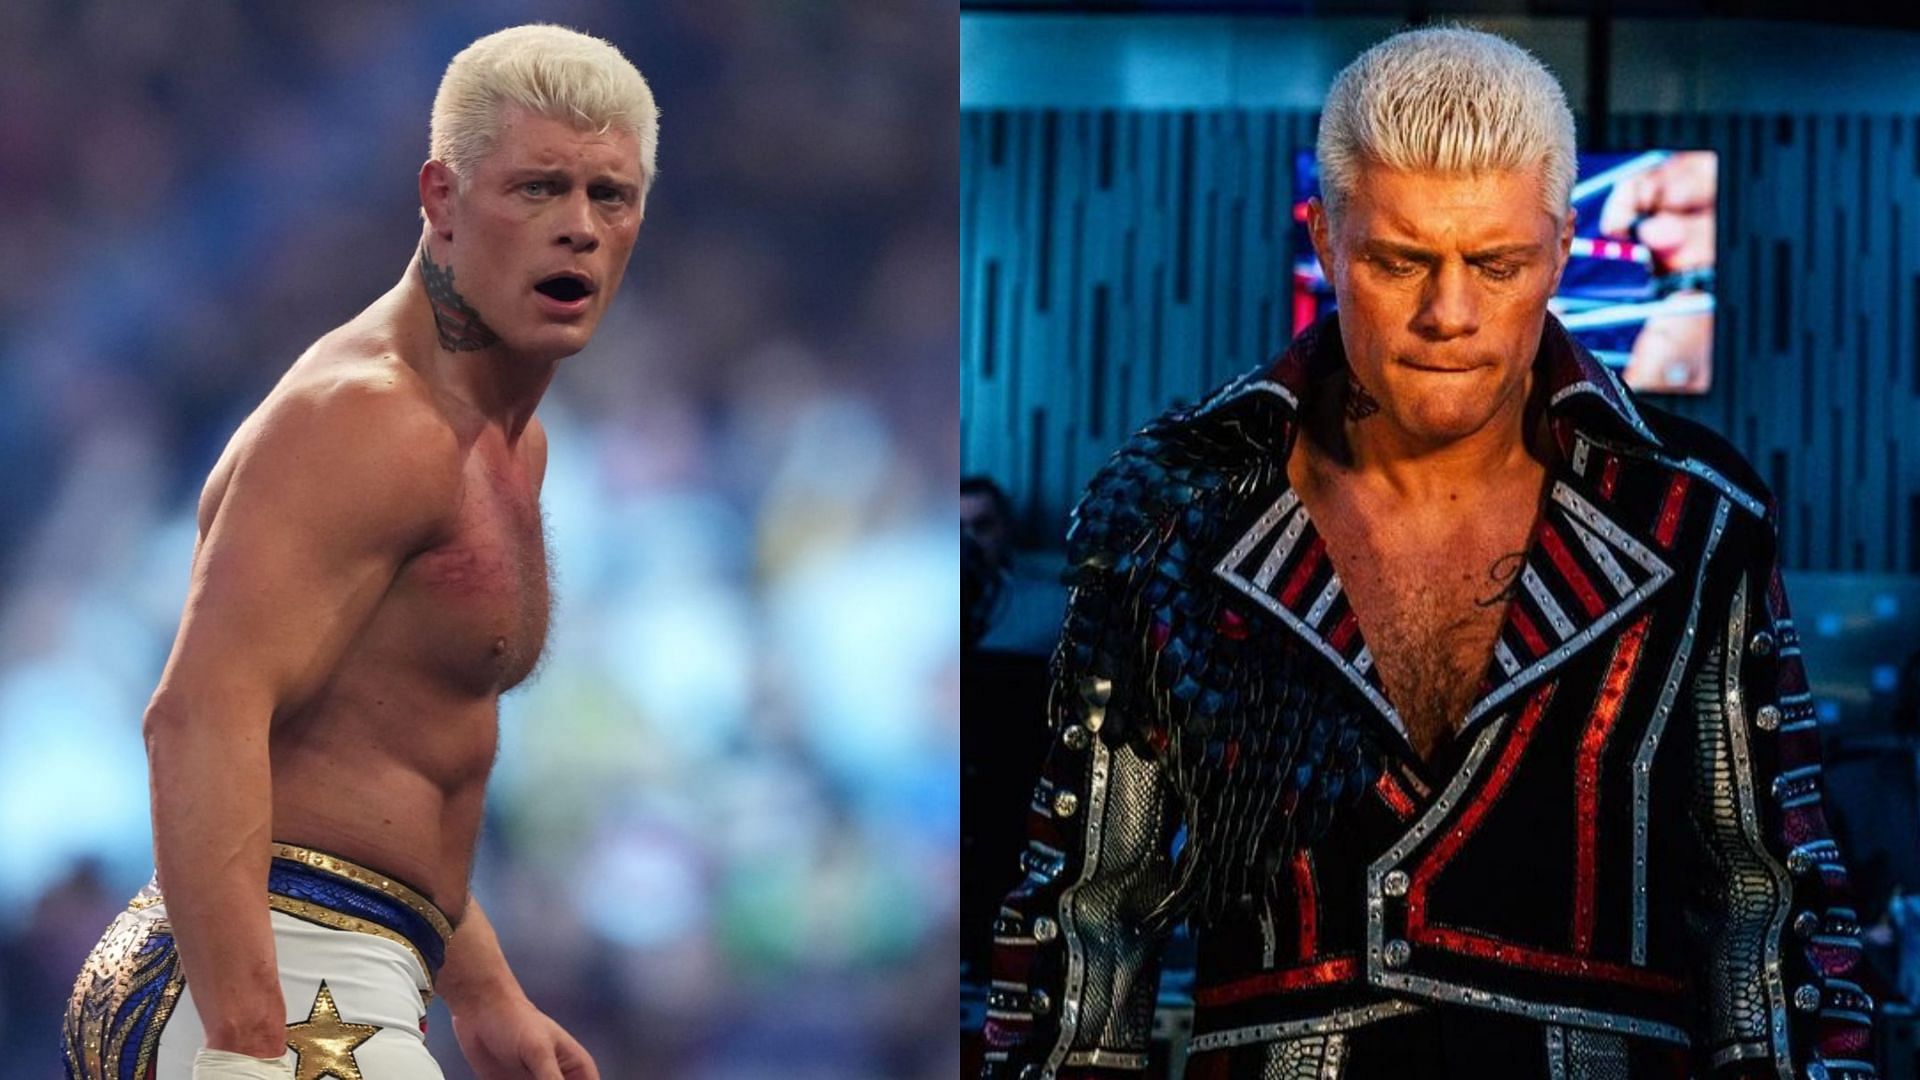 Cody Rhodes returned to WWE last year